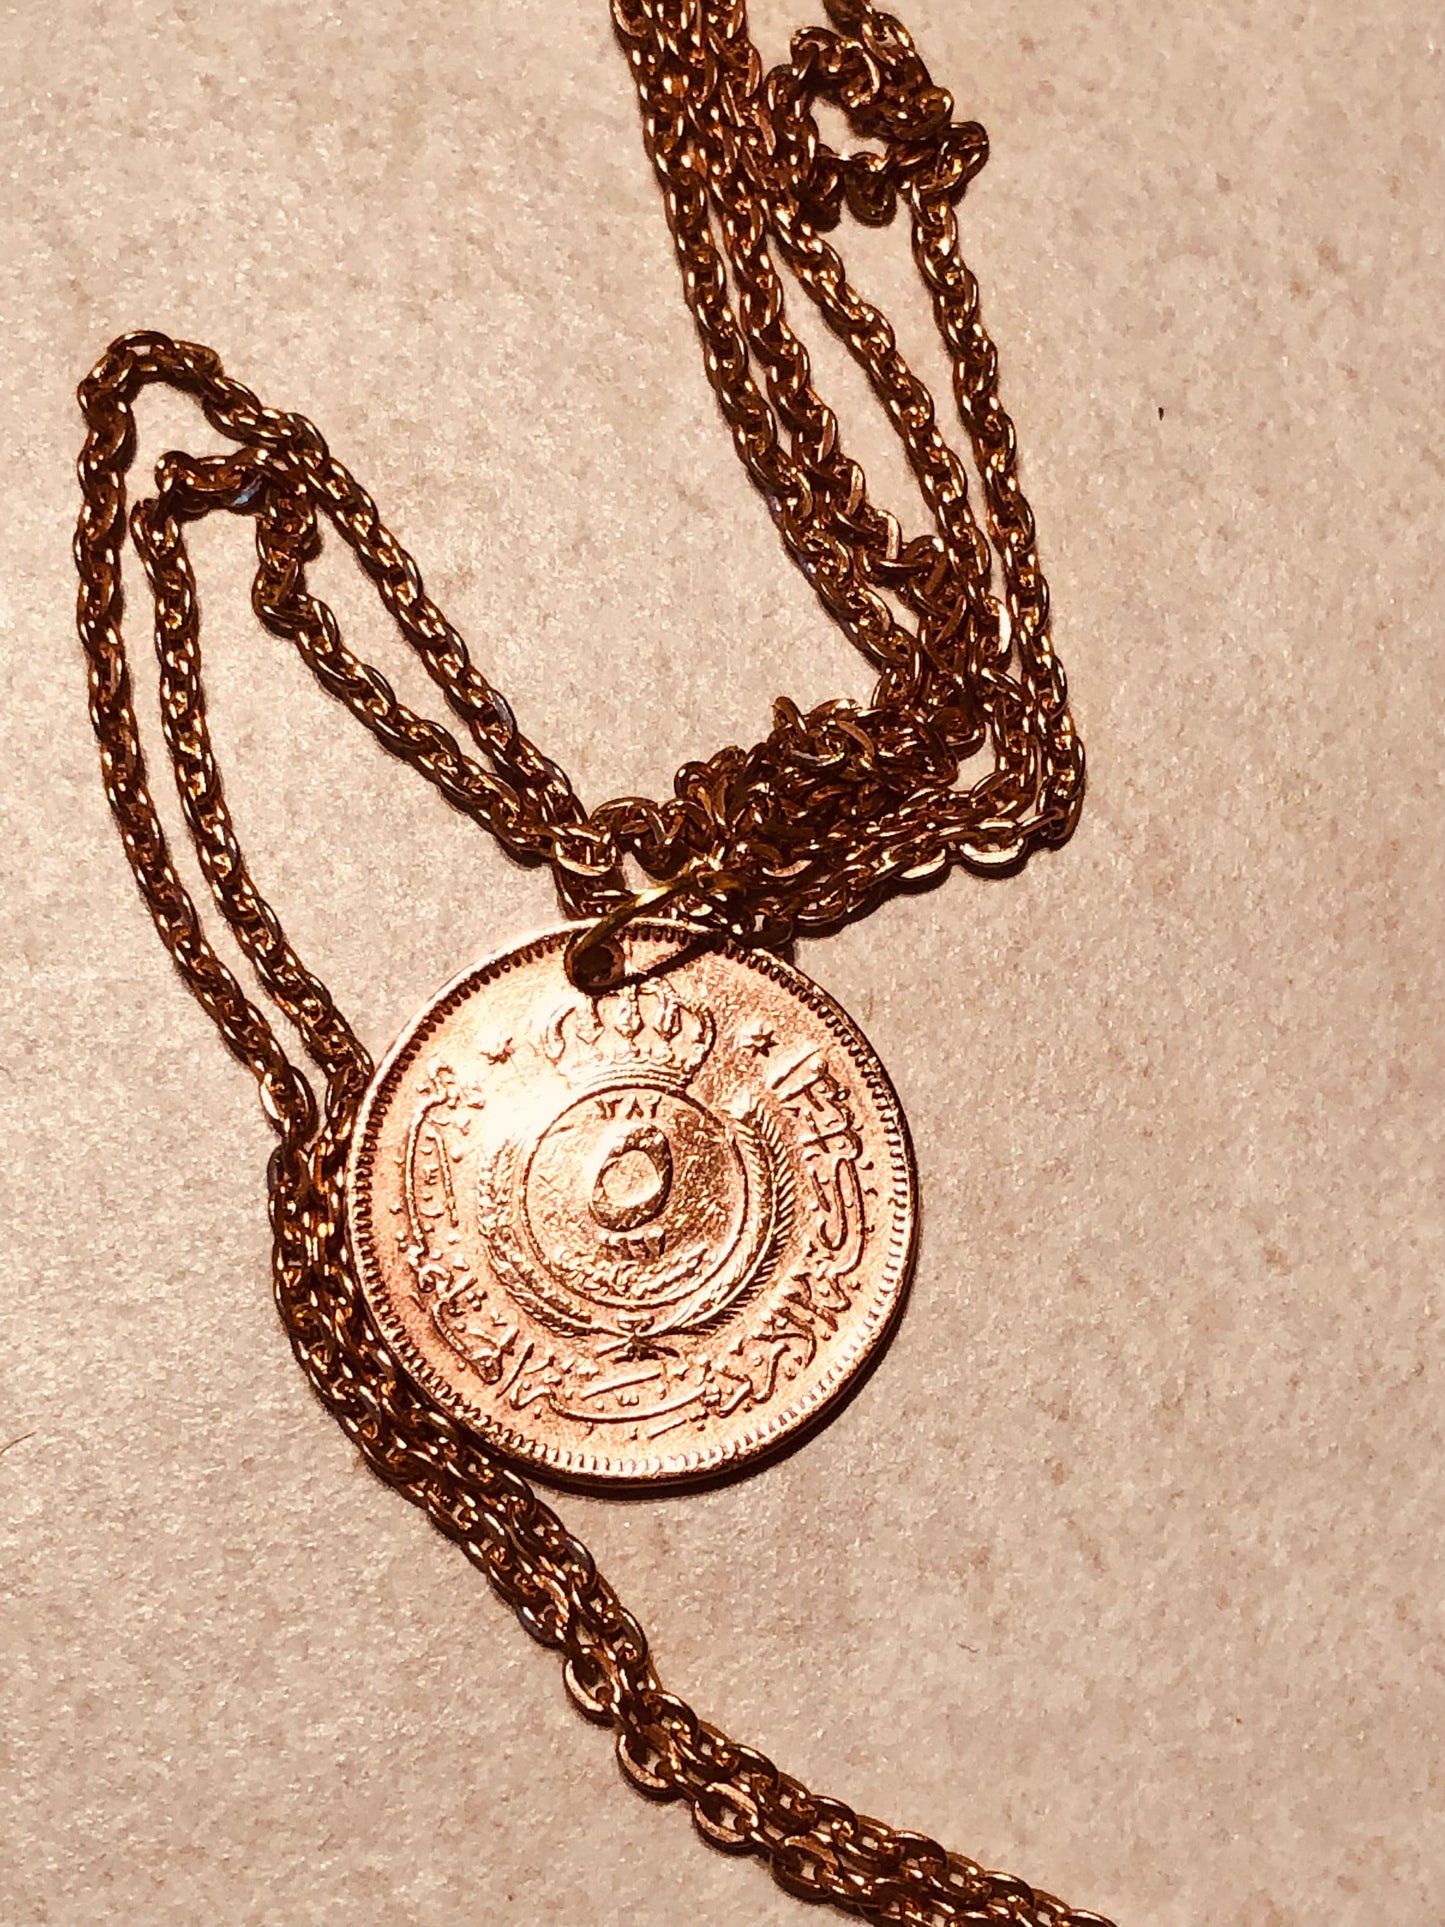 Jordan Coin Necklace Kingdom of Jordan 5 Fils Coin Pendant Vintage Necklace Custom Made Rare coins - Coin Enthusiast - Fashion Accessory